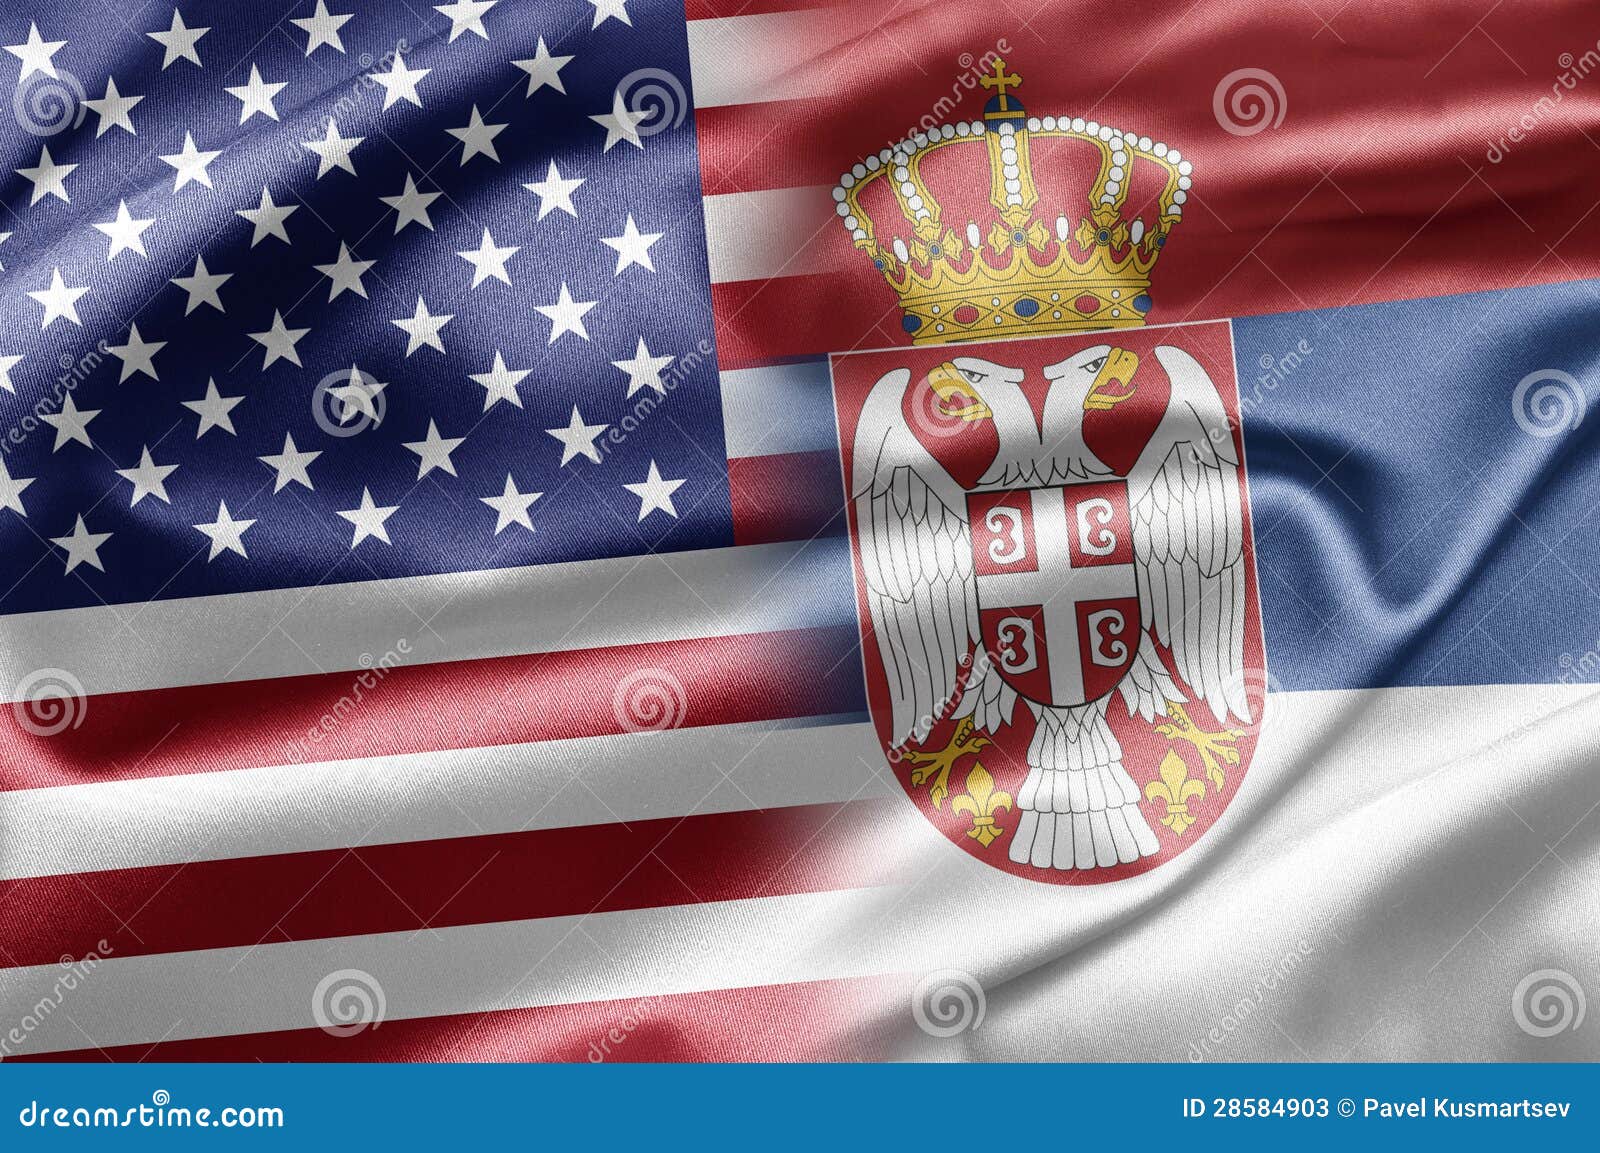 USA And Serbia Stock Photos - Image: 28584903